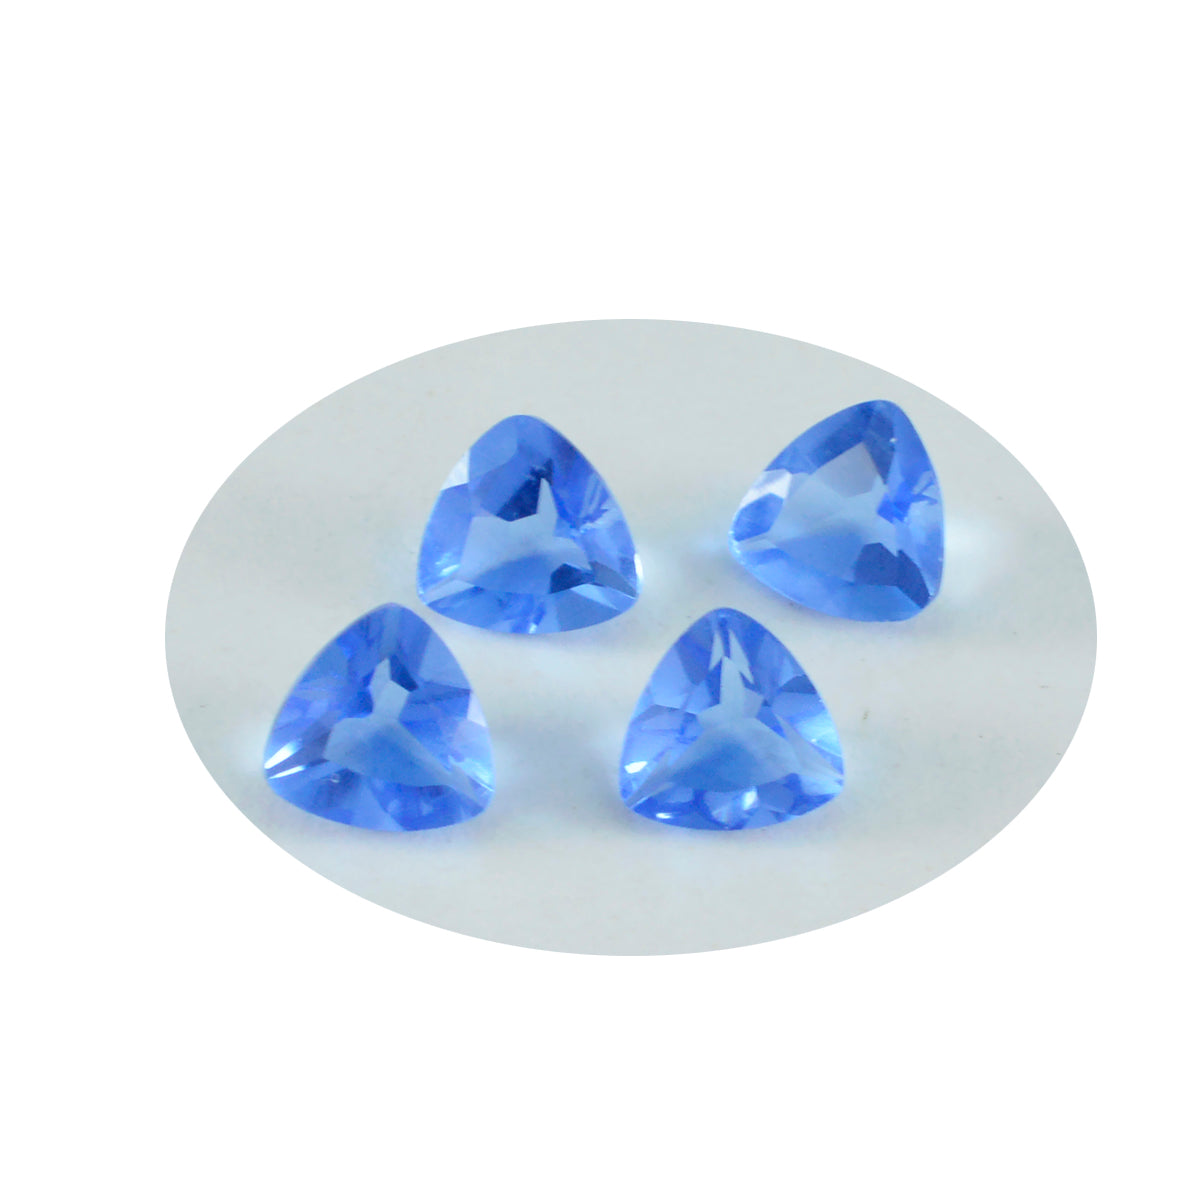 riyogems 1 st blå safir cz fasetterad 9x9 mm biljoner form söt kvalitetspärla